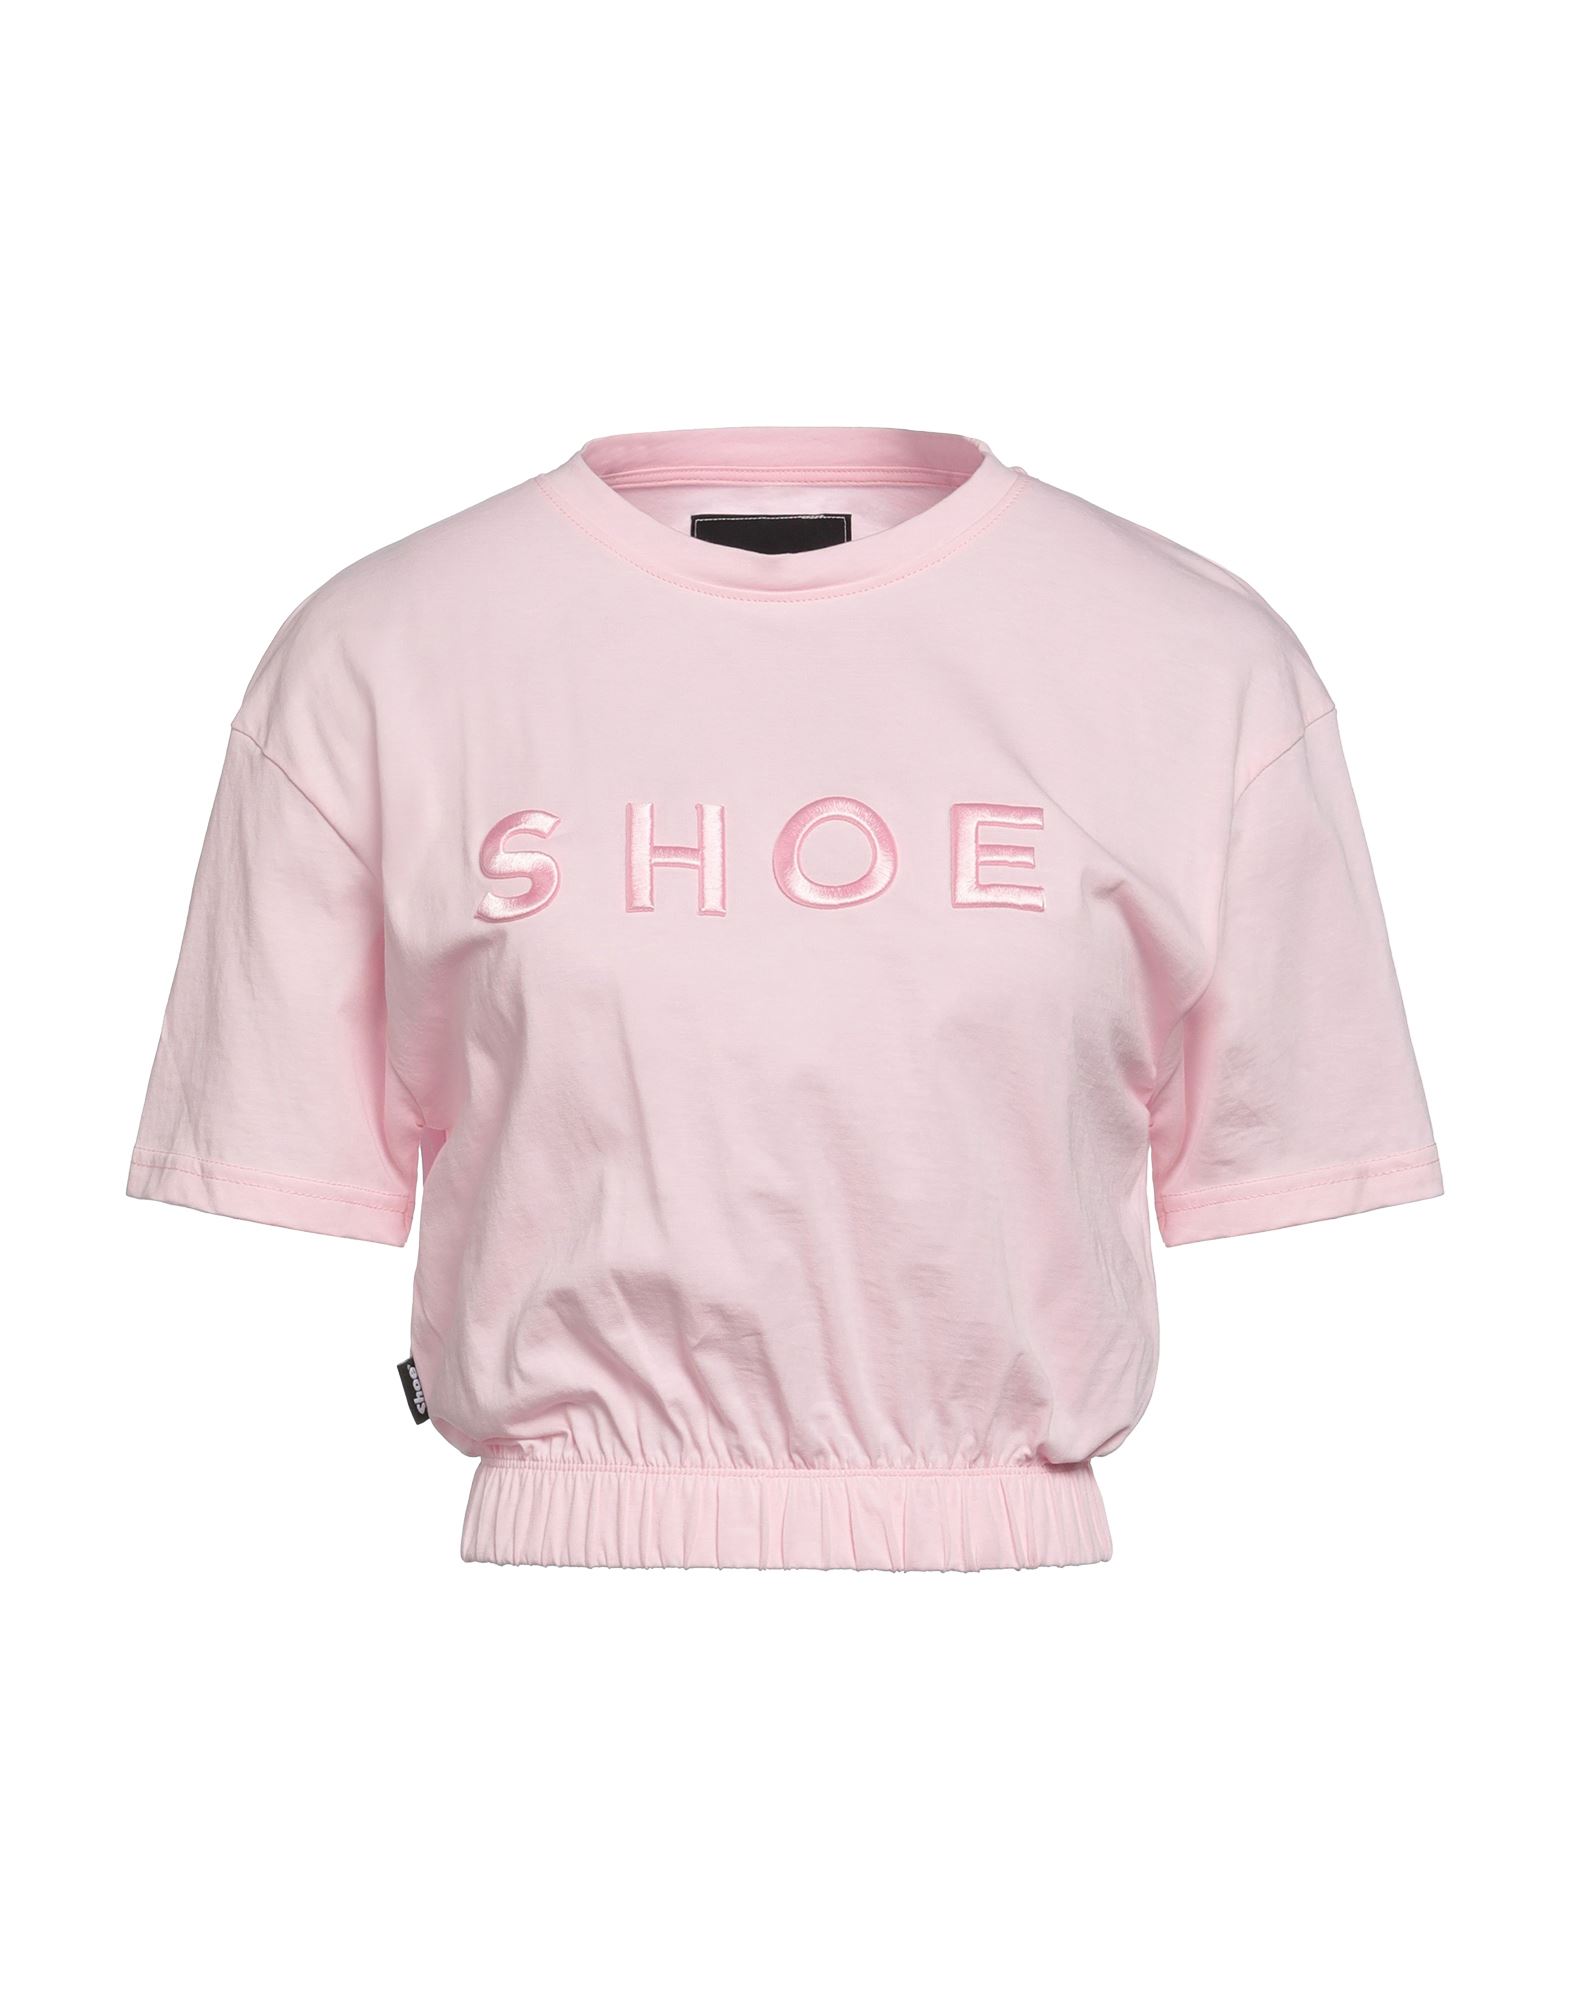 Shoe® Shoe Woman T-shirt Light Pink Size L Cotton